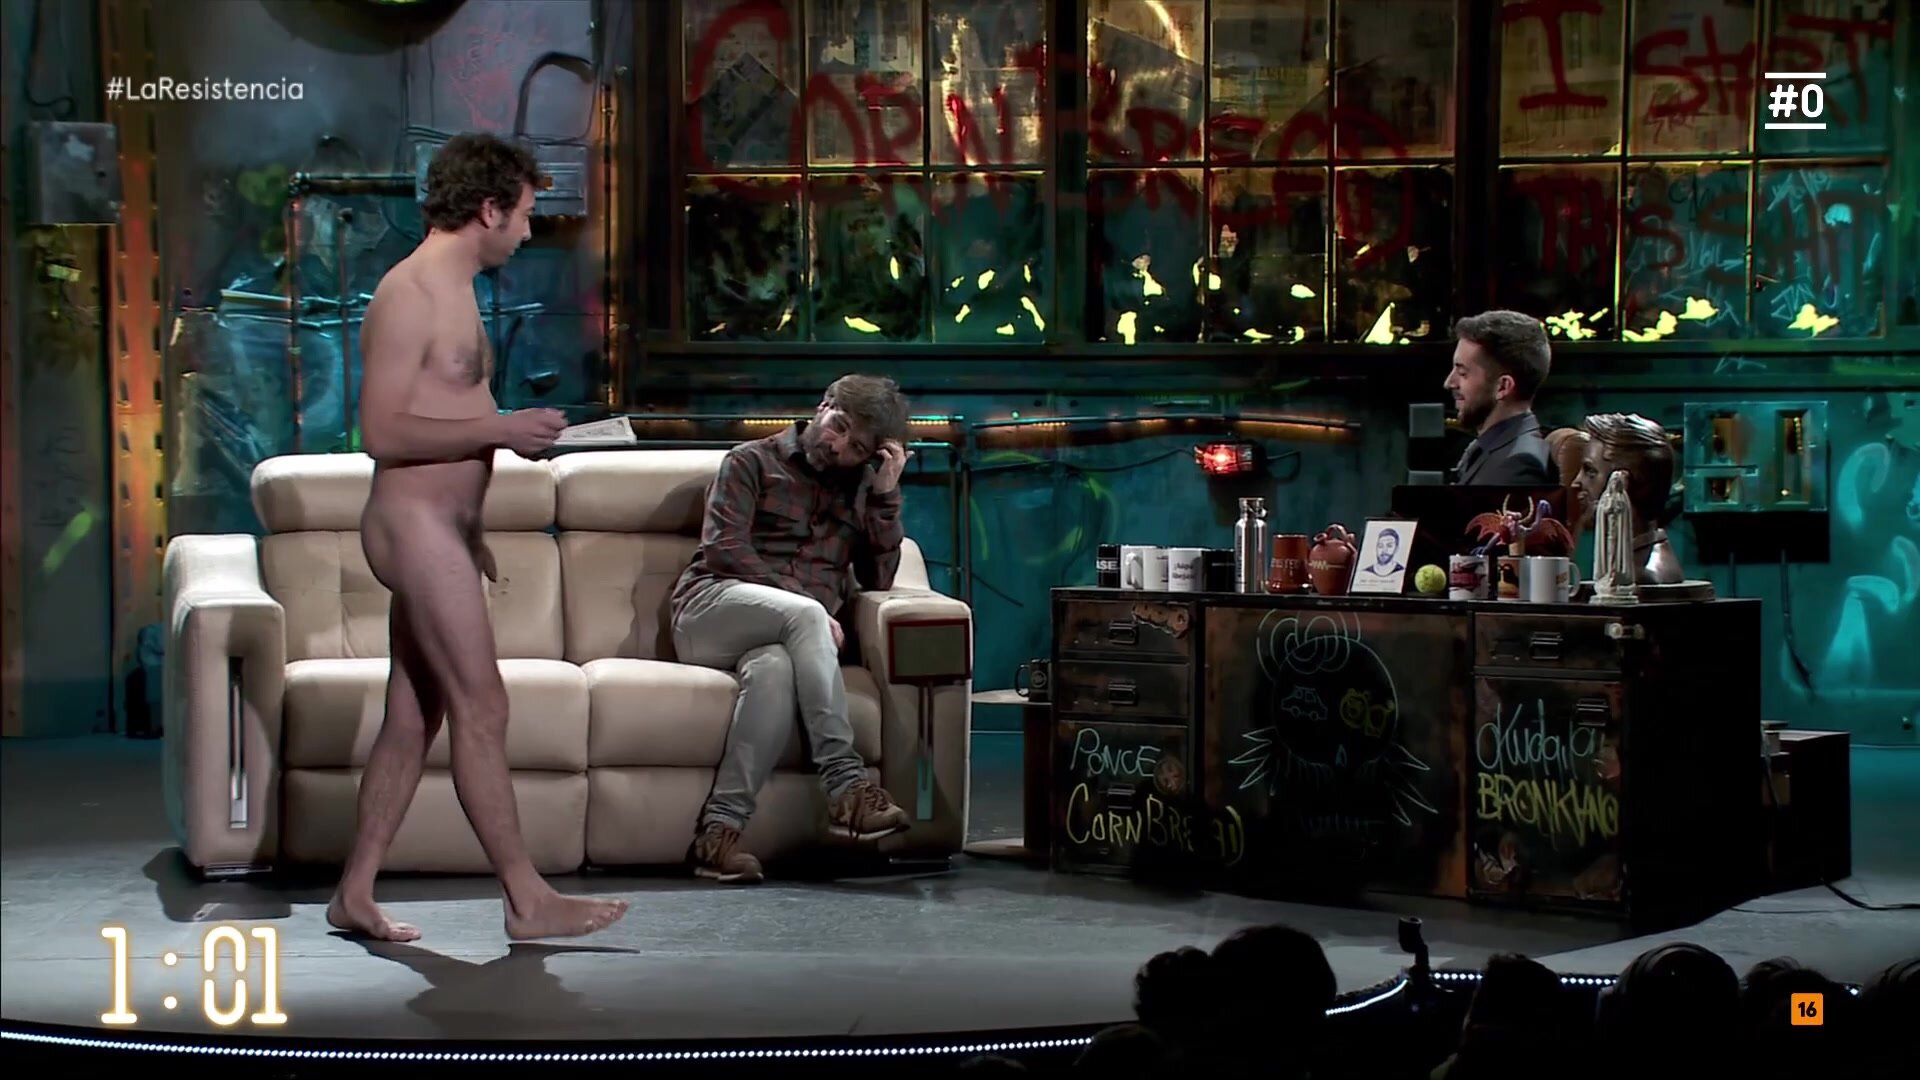 Nude guy in Spanish TV show - ThisVid.com